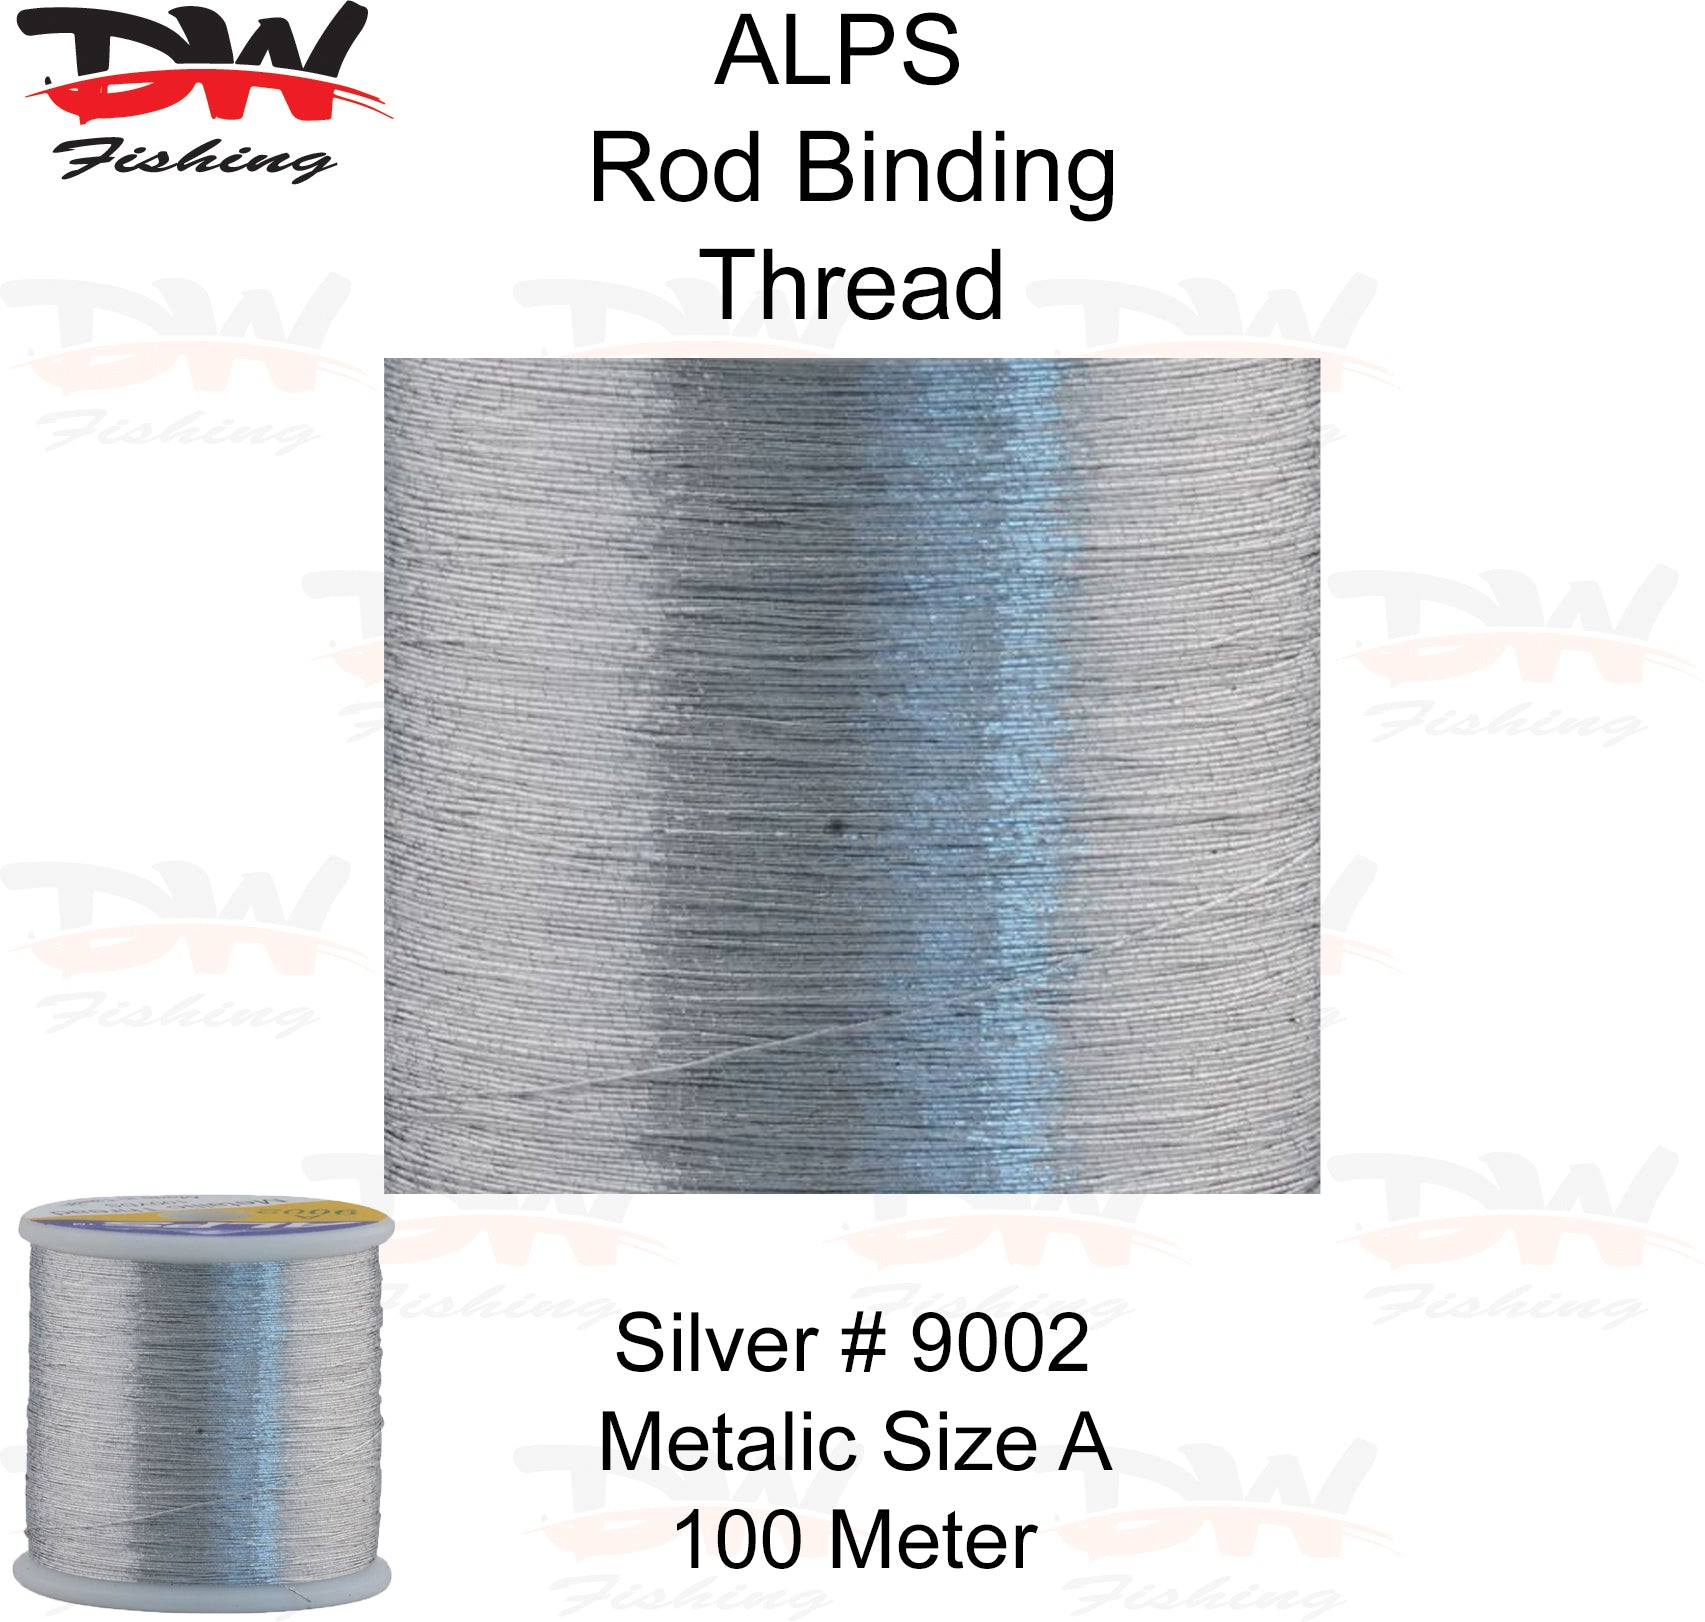 ALPS metalic rod binding thread silver